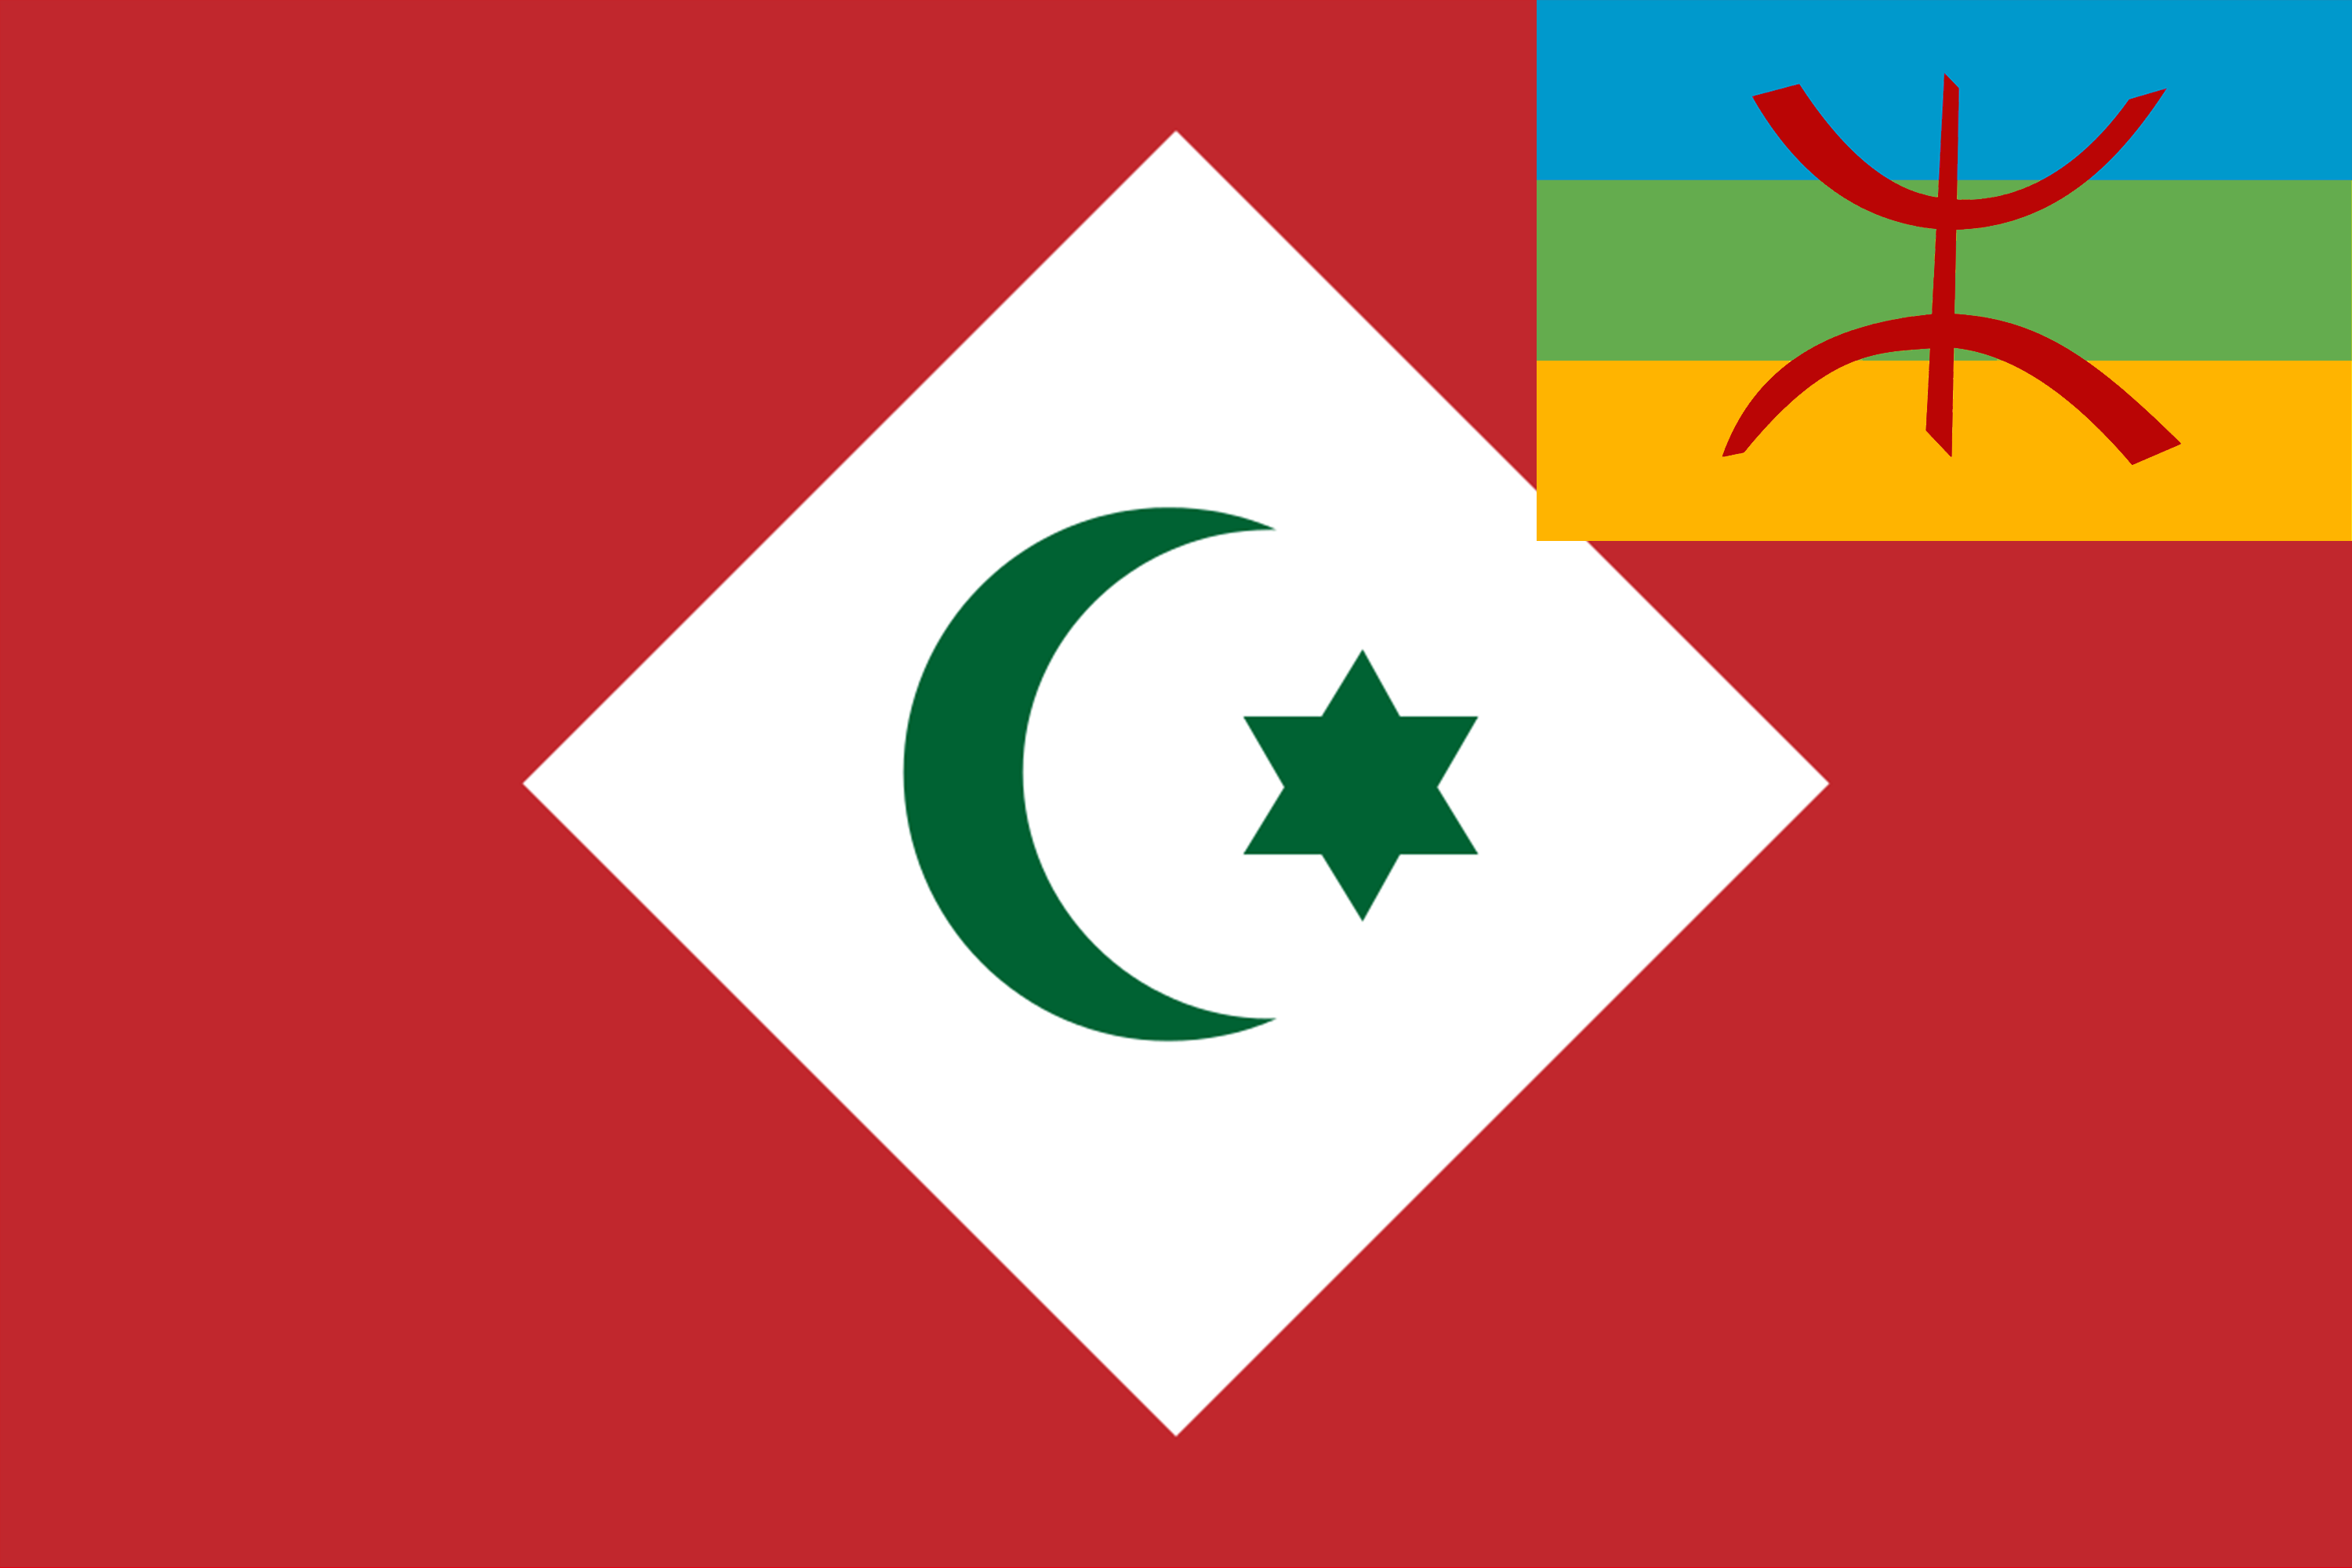 File:Drapeau berbere et drapeau régional du rif.png - Wikimedia